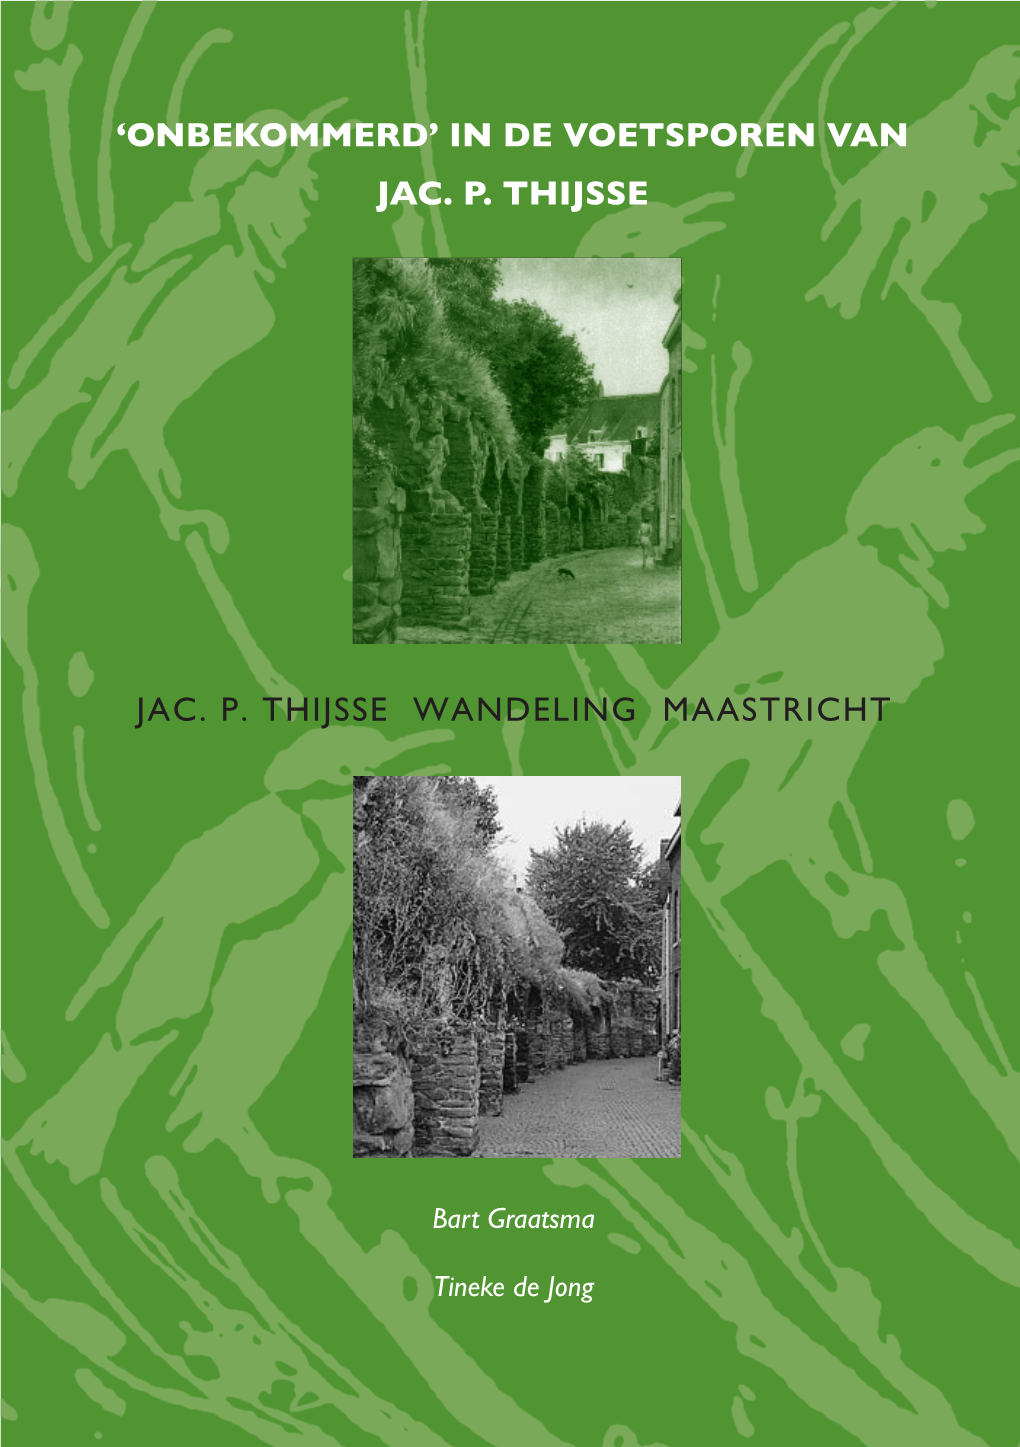 Jac. P. Thijsse Wandeling Maastricht 'Onbekommerd'